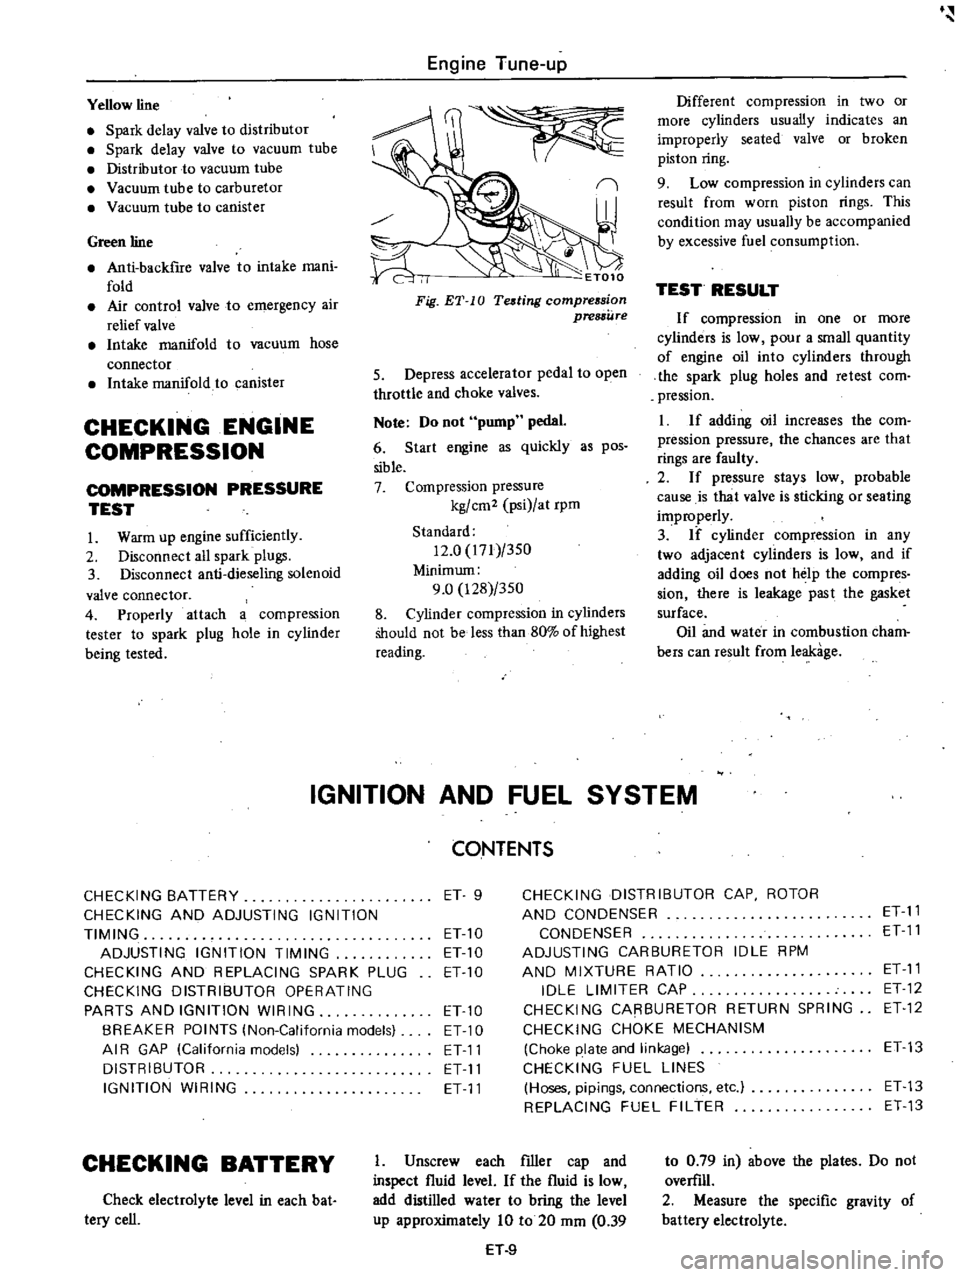 DATSUN PICK-UP 1977  Service Manual 
Yellow

line

Spark 
delay 
valve 
to

distributor

Spark 
delay 
valve 
to 
vacuum 
tube

Distributor

to 
vacuum 
tube

Vacuum 
tube 
to 
carburetor

Vacuum 
tube 
to 
canister

Green 
line

Anti

